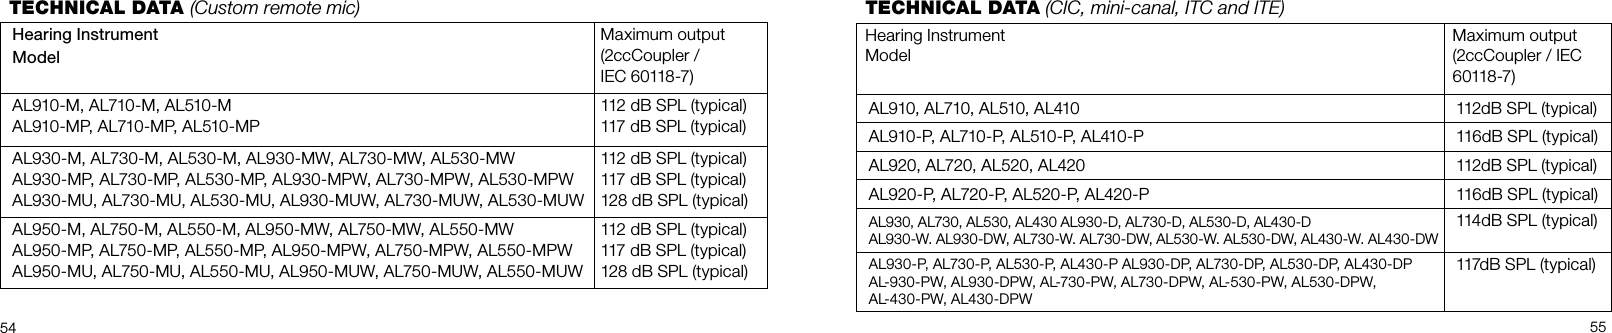 54 55TECHNICAL DATA (Custom remote mic)Hearing Instrument ModelMaximum output(2ccCoupler / IEC 60118-7)AL910-M, AL710-M, AL510-MAL910-MP, AL710-MP, AL510-MP112 dB SPL (typical)117 dB SPL (typical)AL930-M, AL730-M, AL530-M, AL930-MW, AL730-MW, AL530-MWAL930-MP, AL730-MP, AL530-MP, AL930-MPW, AL730-MPW, AL530-MPWAL930-MU, AL730-MU, AL530-MU, AL930-MUW, AL730-MUW, AL530-MUW112 dB SPL (typical)117 dB SPL (typical)128 dB SPL (typical)AL950-M, AL750-M, AL550-M, AL950-MW, AL750-MW, AL550-MWAL950-MP, AL750-MP, AL550-MP, AL950-MPW, AL750-MPW, AL550-MPWAL950-MU, AL750-MU, AL550-MU, AL950-MUW, AL750-MUW, AL550-MUW112 dB SPL (typical)117 dB SPL (typical)128 dB SPL (typical)TECHNICAL DATA (CIC, mini-canal, ITC and ITE)Hearing Instrument ModelMaximum output (2ccCoupler / IEC 60118-7)AL910, AL710, AL510, AL410 112dB SPL (typical)AL910-P, AL710-P, AL510-P, AL410-P 116dB SPL (typical)AL920, AL720, AL520, AL420 112dB SPL (typical)AL920-P, AL720-P, AL520-P, AL420-P 116dB SPL (typical)AL930, AL730, AL530, AL430 AL930-D, AL730-D, AL530-D, AL430-DAL930-W. AL930-DW, AL730-W. AL730-DW, AL530-W. AL530-DW, AL430-W. AL430-DW114dB SPL (typical)AL930-P, AL730-P, AL530-P, AL430-P AL930-DP, AL730-DP, AL530-DP, AL430-DPAL-930-PW, AL930-DPW, AL-730-PW, AL730-DPW, AL-530-PW, AL530-DPW, AL-430-PW, AL430-DPW117dB SPL (typical)